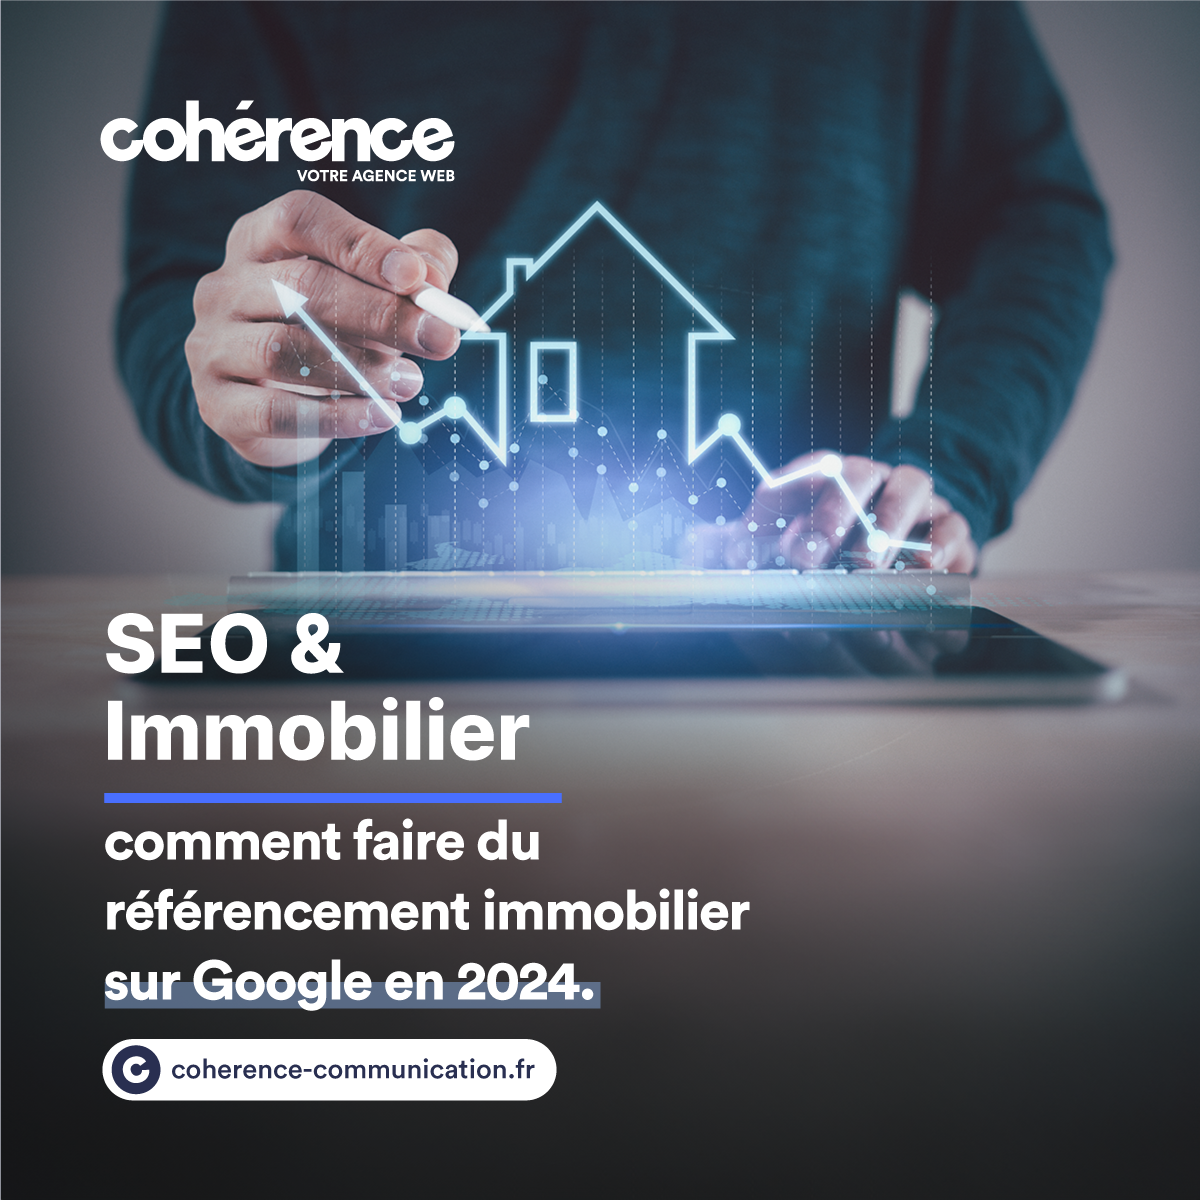 Coherence Agence Web A Rennes SEO Immobilier Comment Faire Du Referencement Immobilier Sur Google En 2024